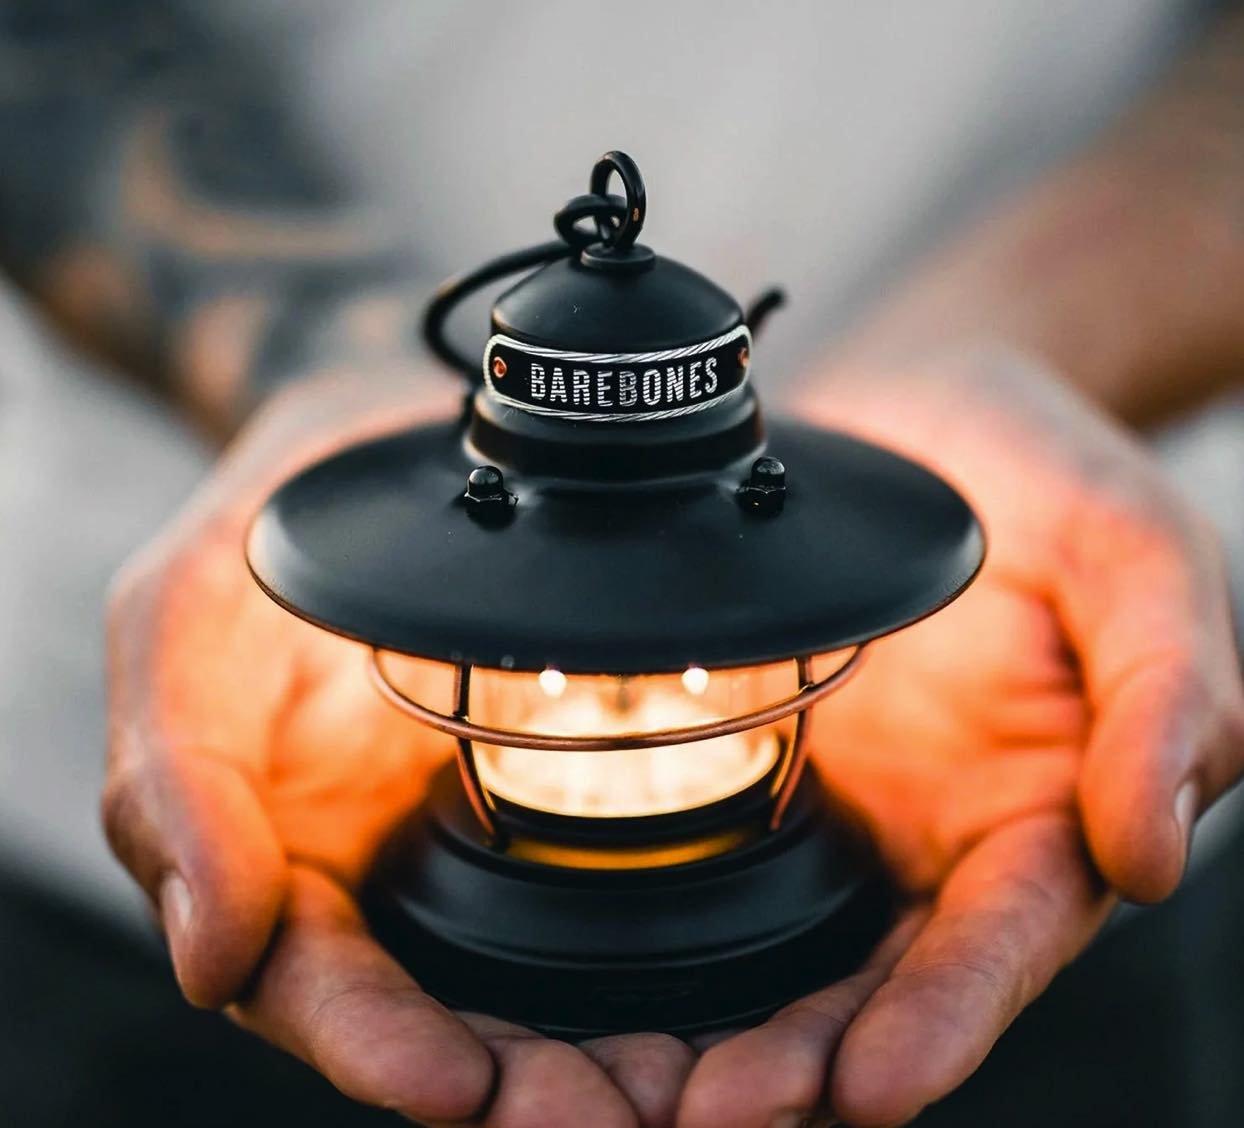 Edison Mini Lantern - Antique Bronze